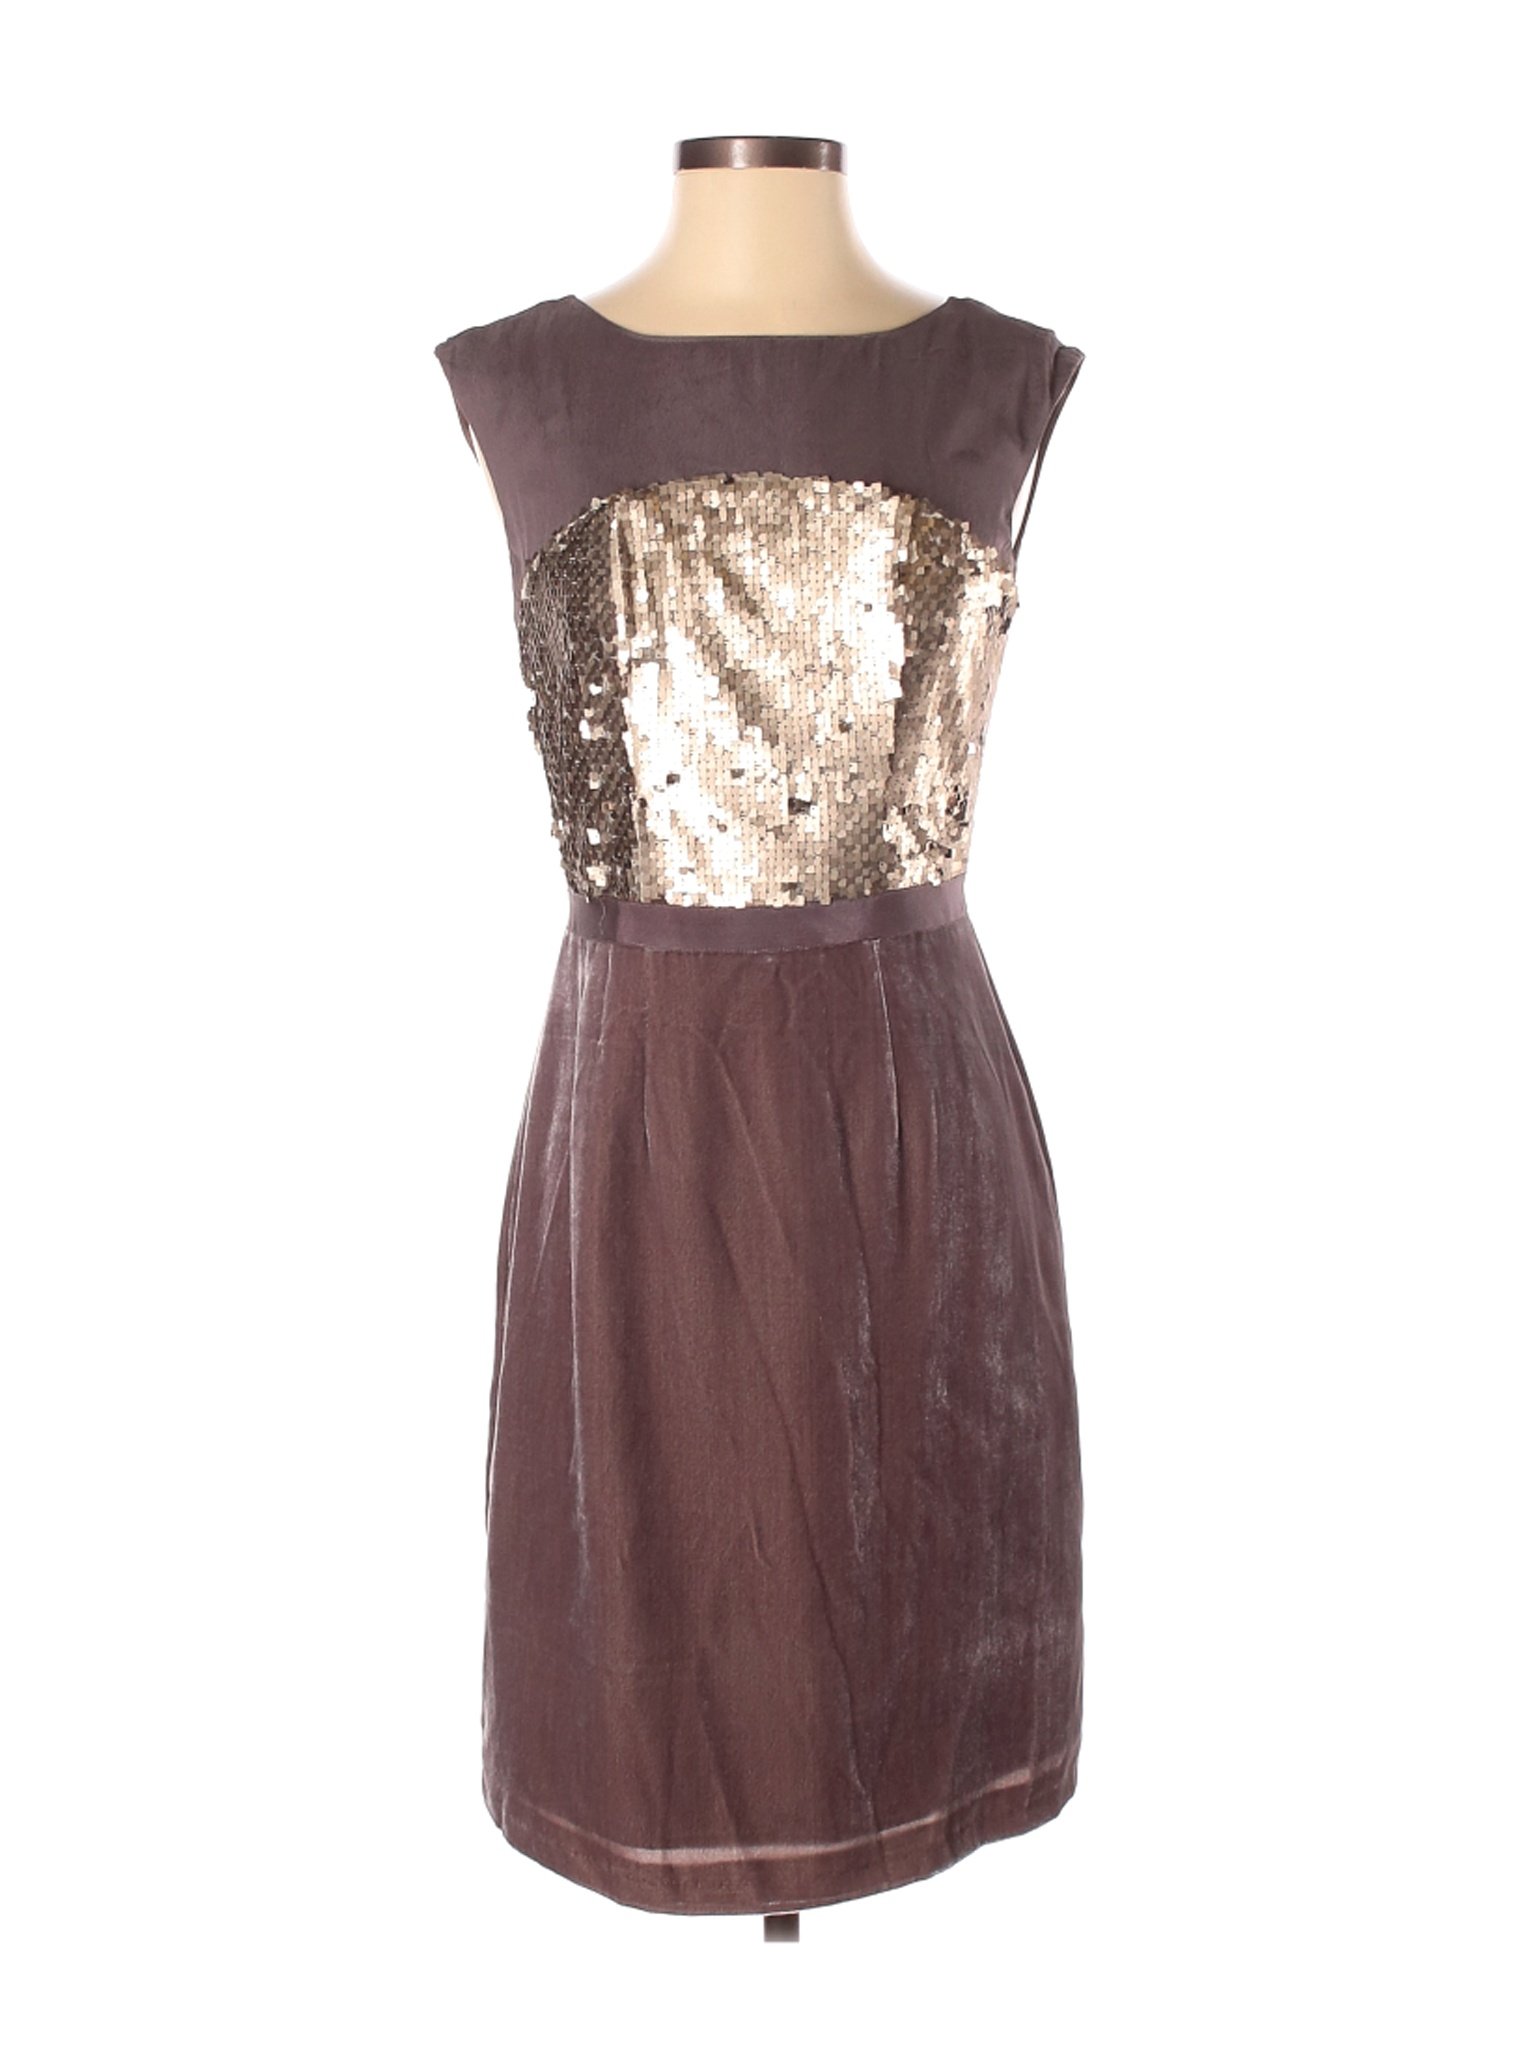 Boden Women Brown Cocktail Dress 2 | eBay